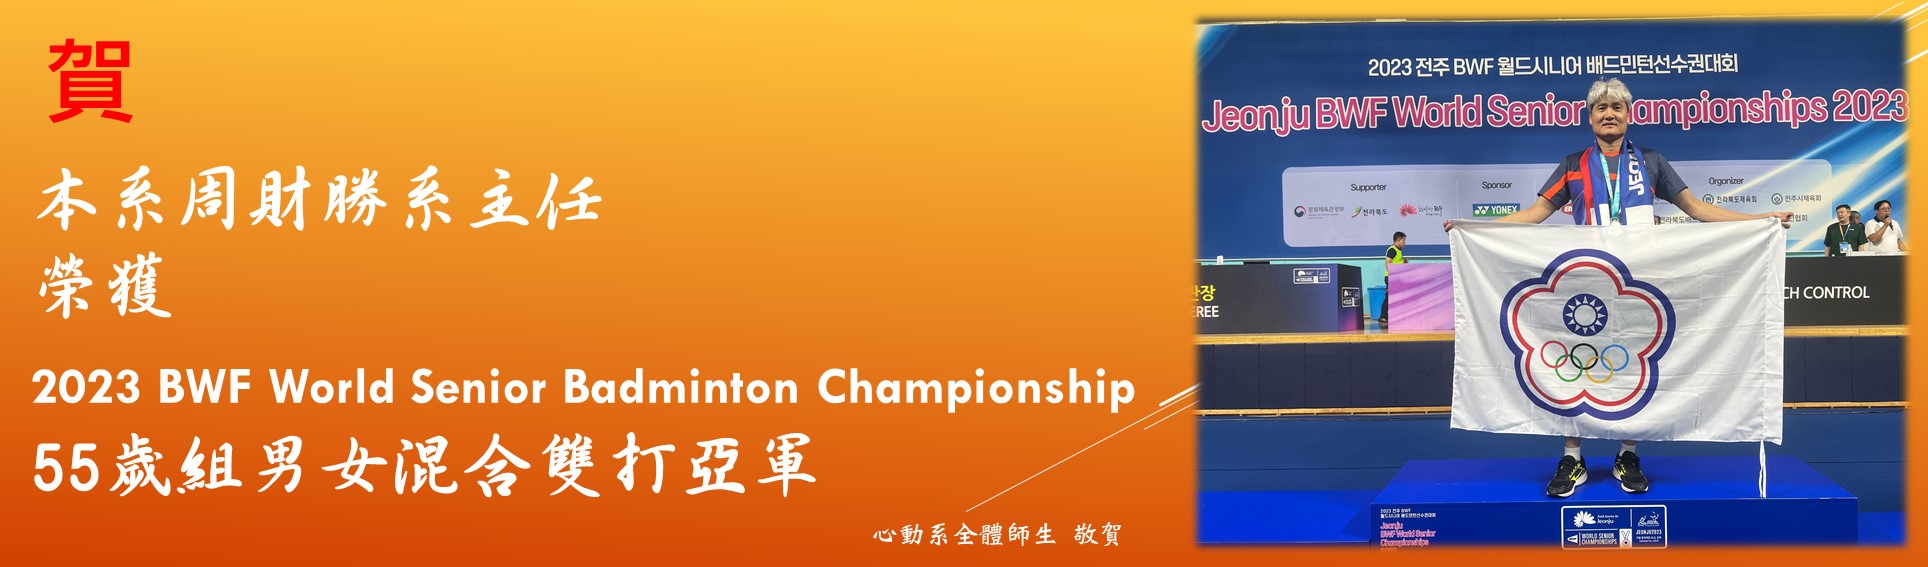 1120917 本系周財勝系主任榮獲2023 BWF World Senior Badminton Championship55歲組男女混合雙打亞軍